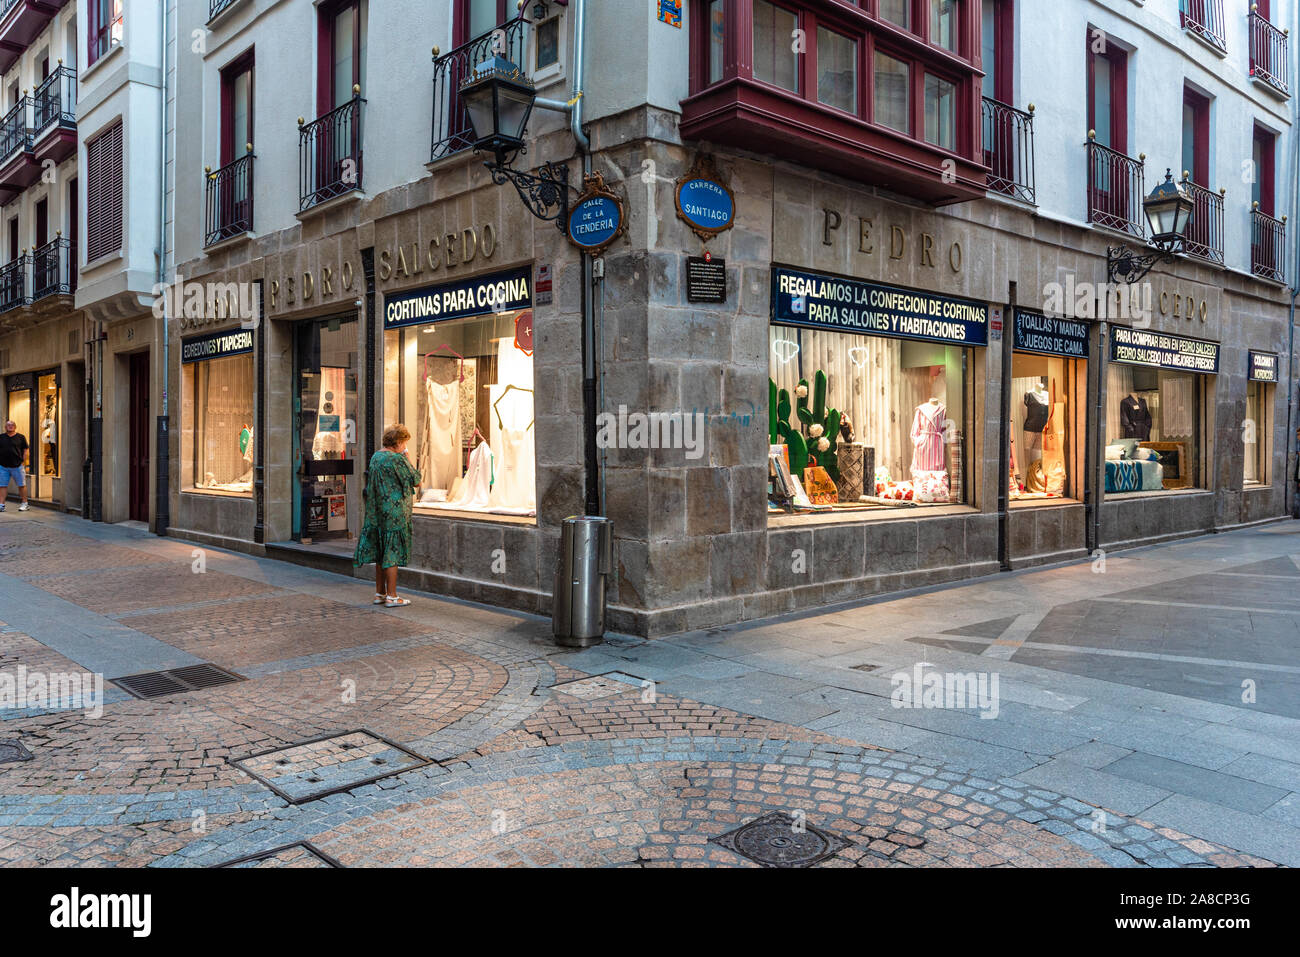 Bilbao, Spain - September 16, 2019. The facade of the Textile shop Pedro  Salcedo Dilua on street Dendarikale Stock Photo - Alamy